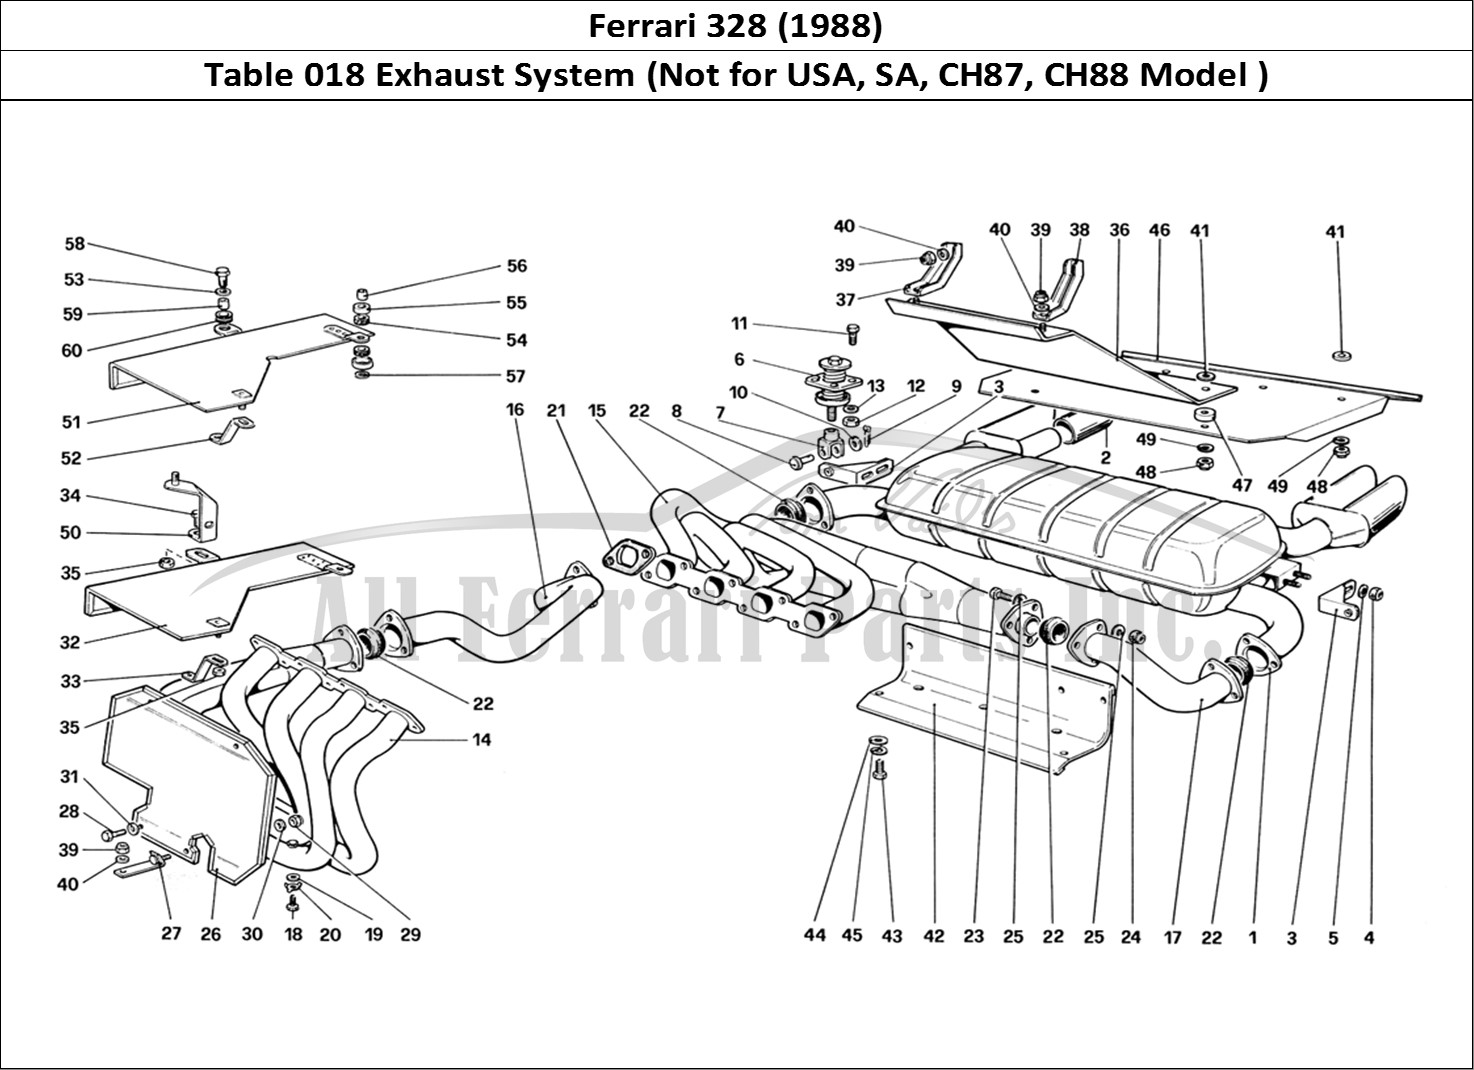 Ferrari Parts Ferrari 328 (1988) Page 018 Exhaust System (Not for U